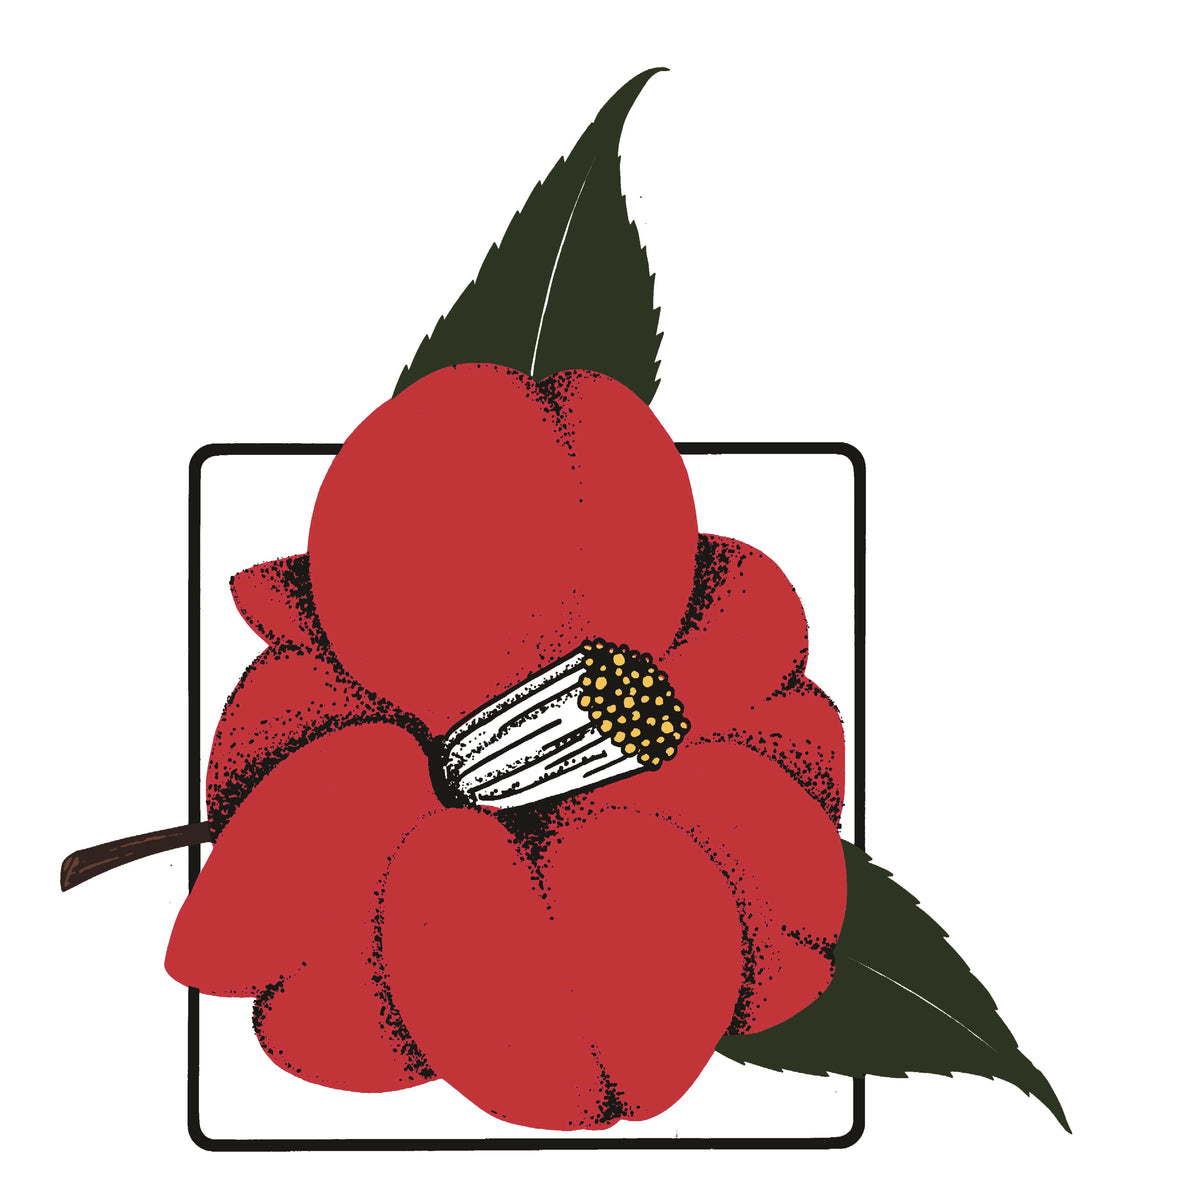 Camellia Flower Sticker – CJ's Sticker Shop